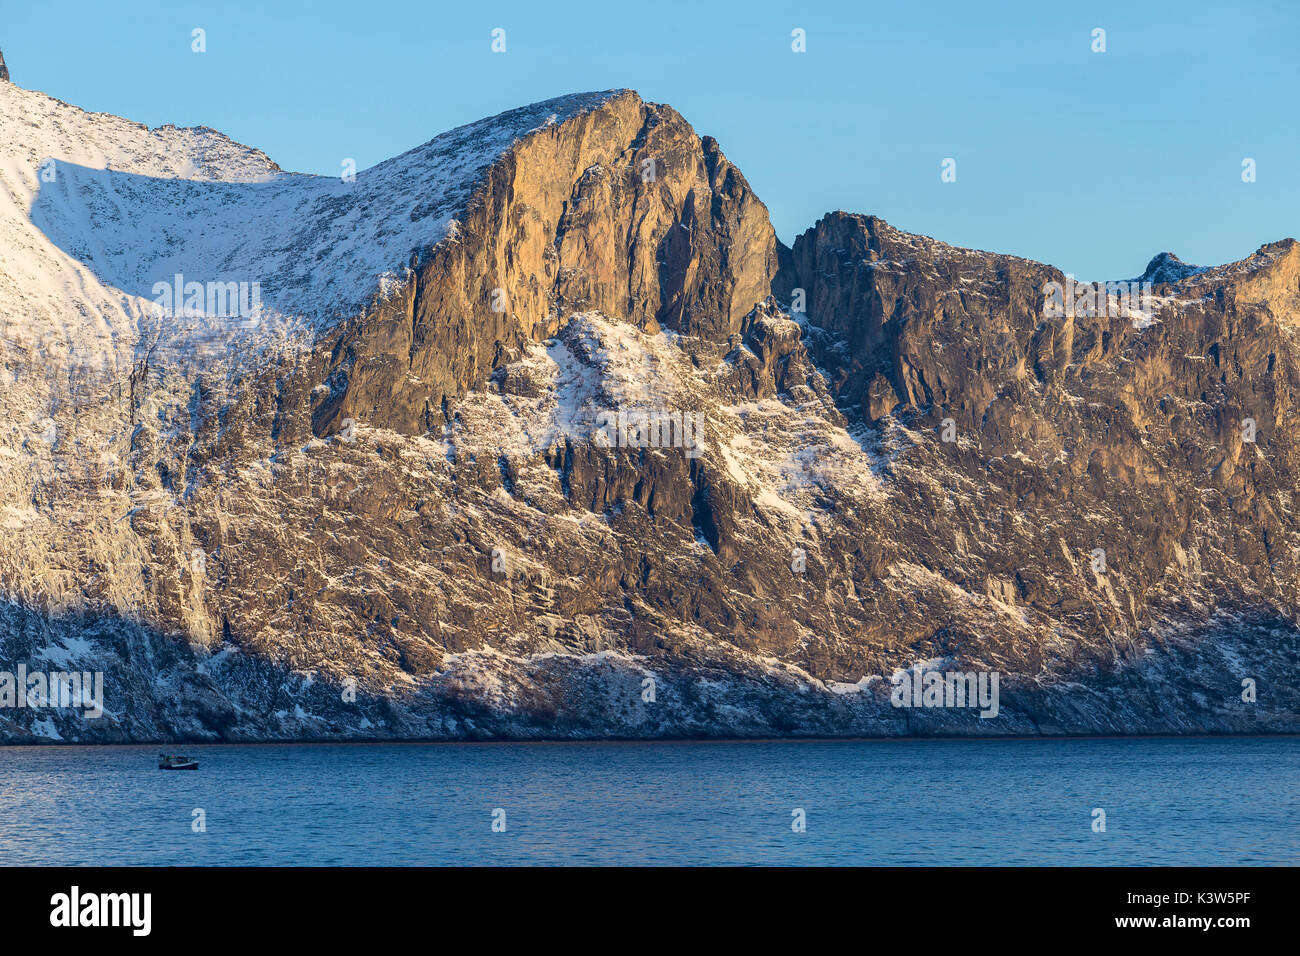 Fishing boat sails in Mefjorden with imposing rock walls behind it. Mefjordvaer, Mefjorden, Senja, Norway, Europe. Stock Photo